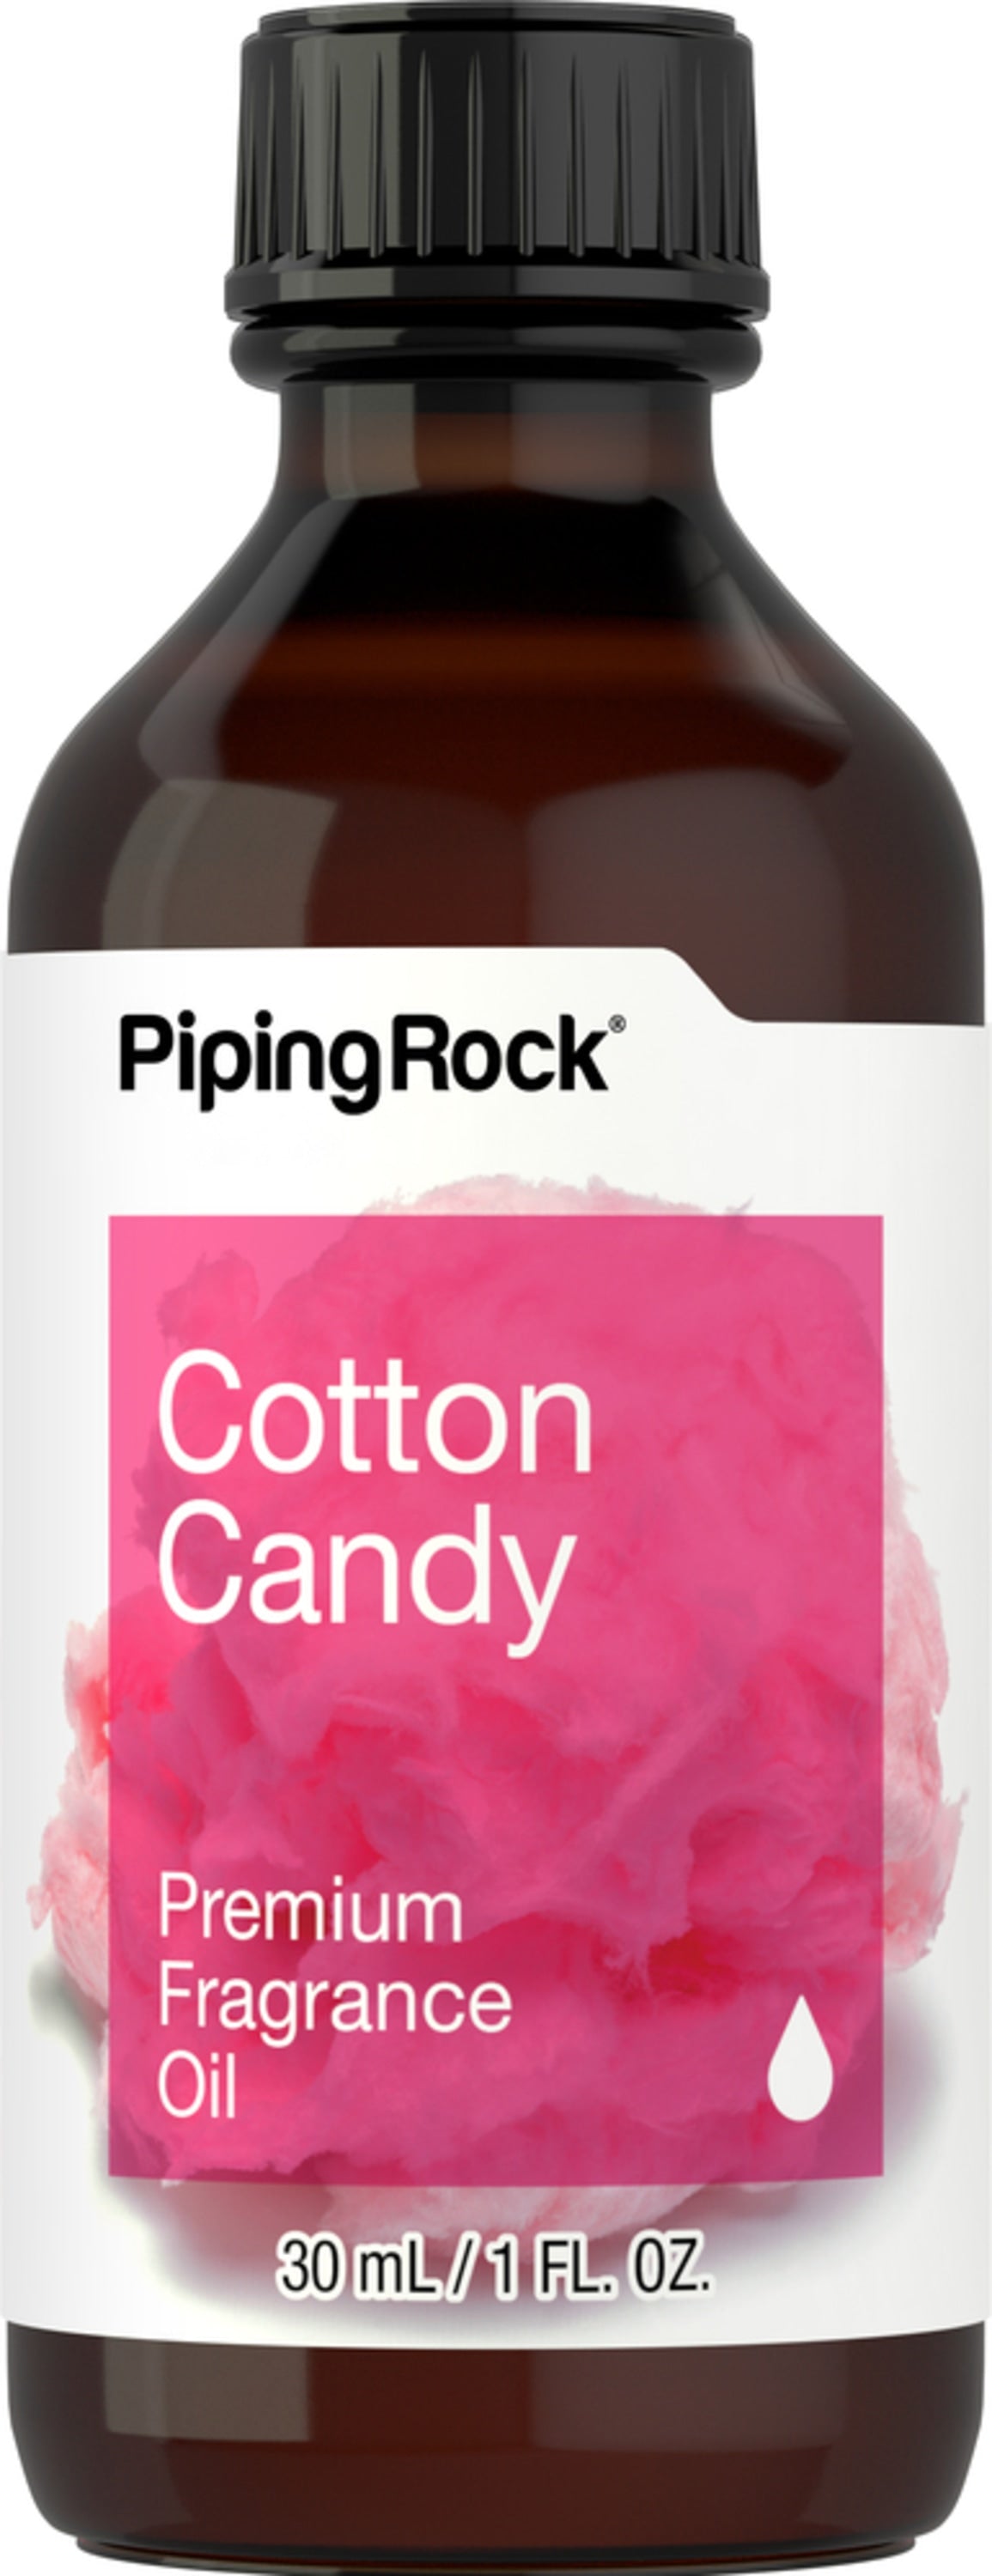 Cotton Candy Premium Fragrance Oil, 1 fl oz (30ML) Dropper Bottle